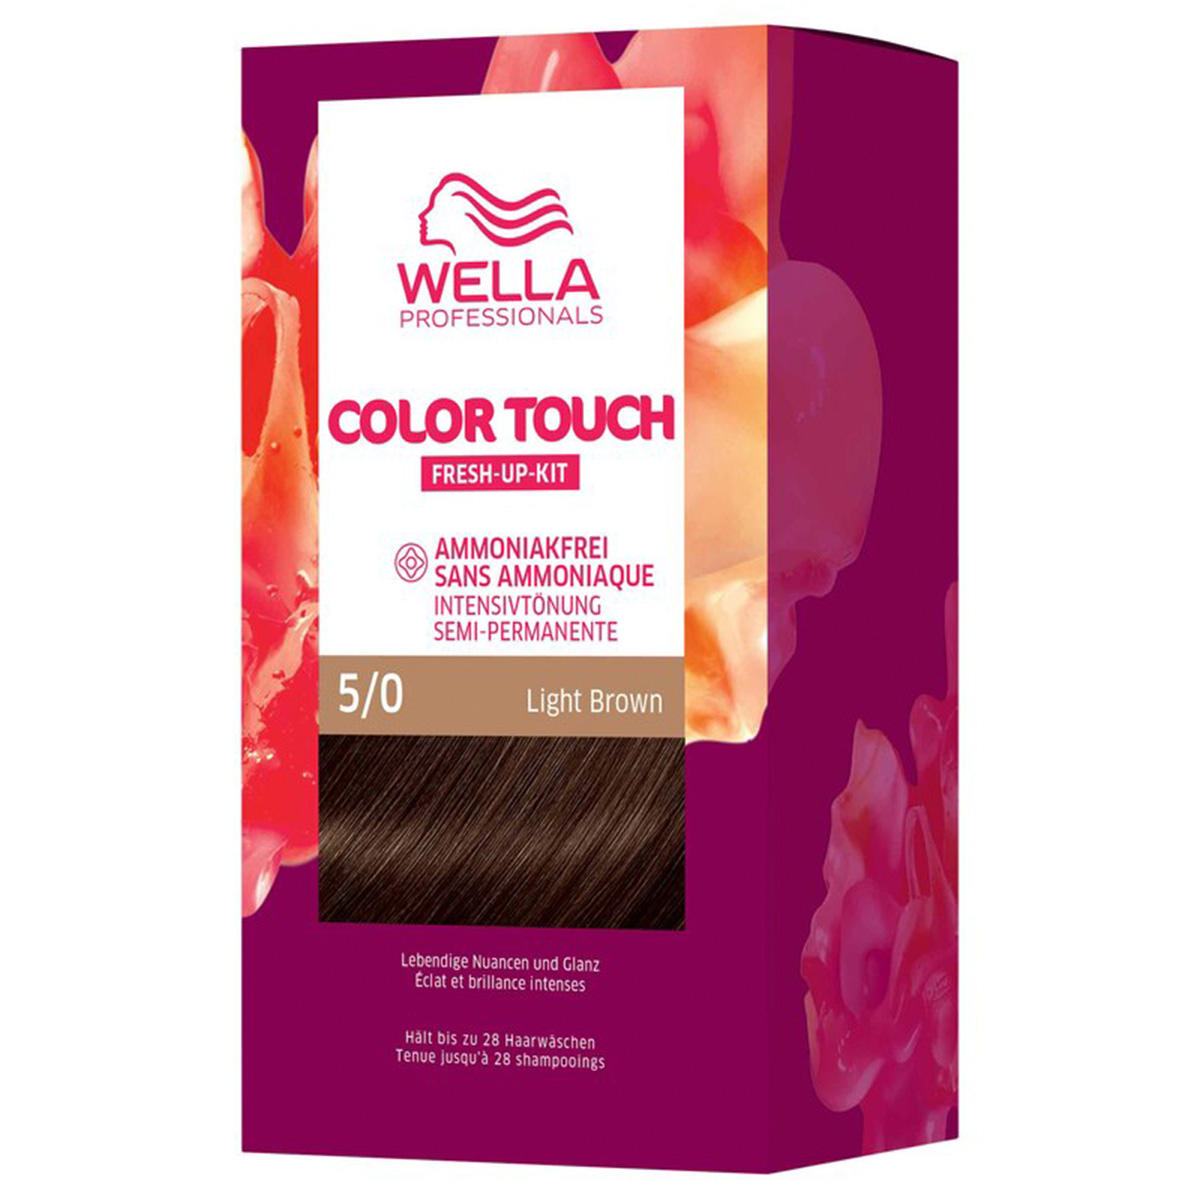 Wella Color Touch Fresh-Up-Kit 5/0 Marrone chiaro 130 ml - 1